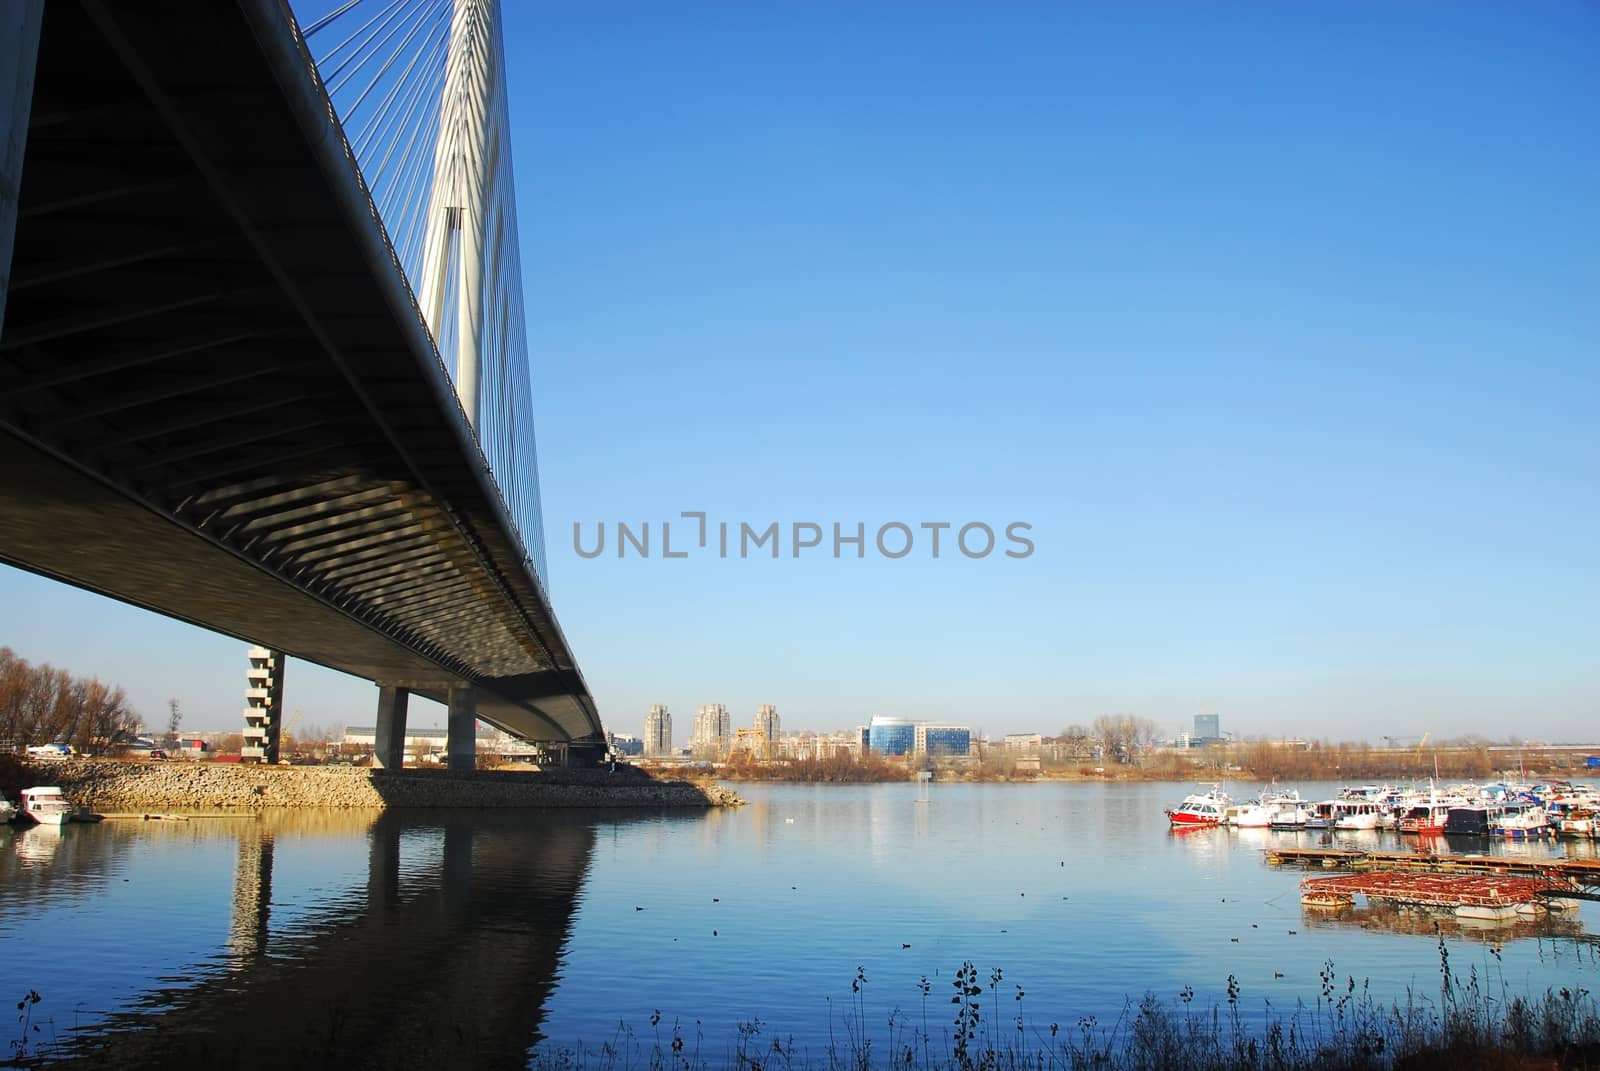 Ada bridge tower in Belgrade, Serbia by simply